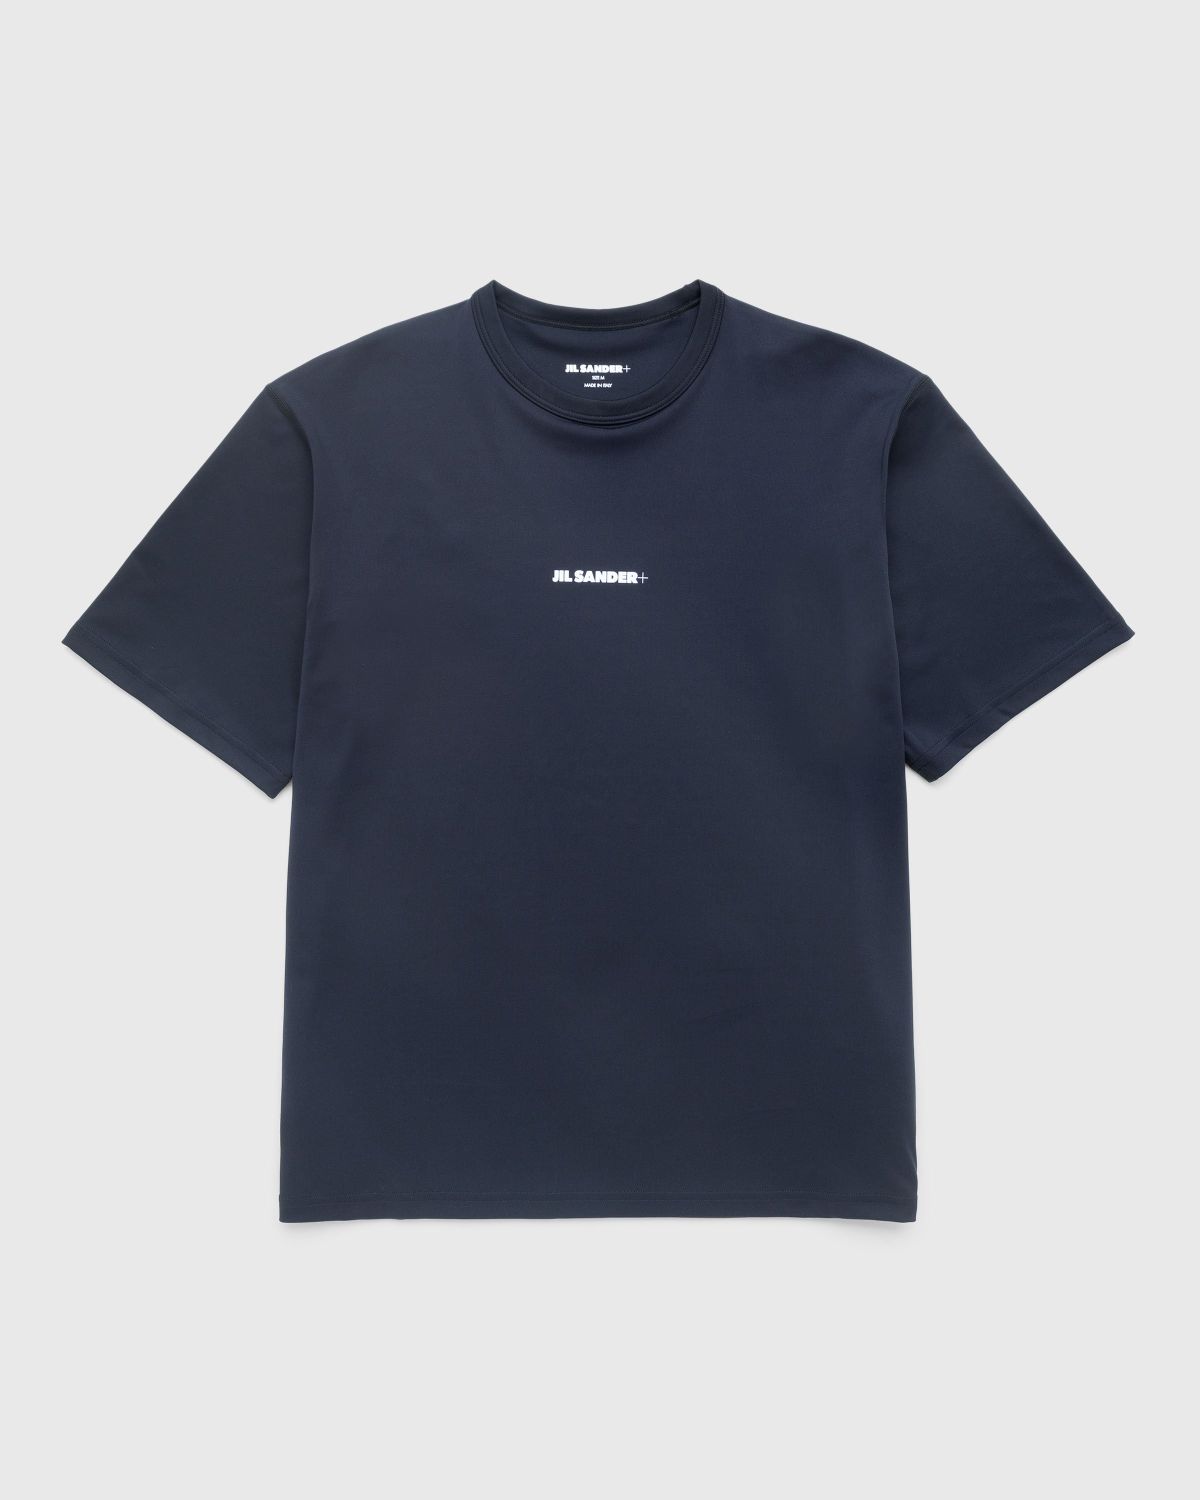 Jil Sander – Logo T-Shirt Black - T-shirts - Black - Image 1